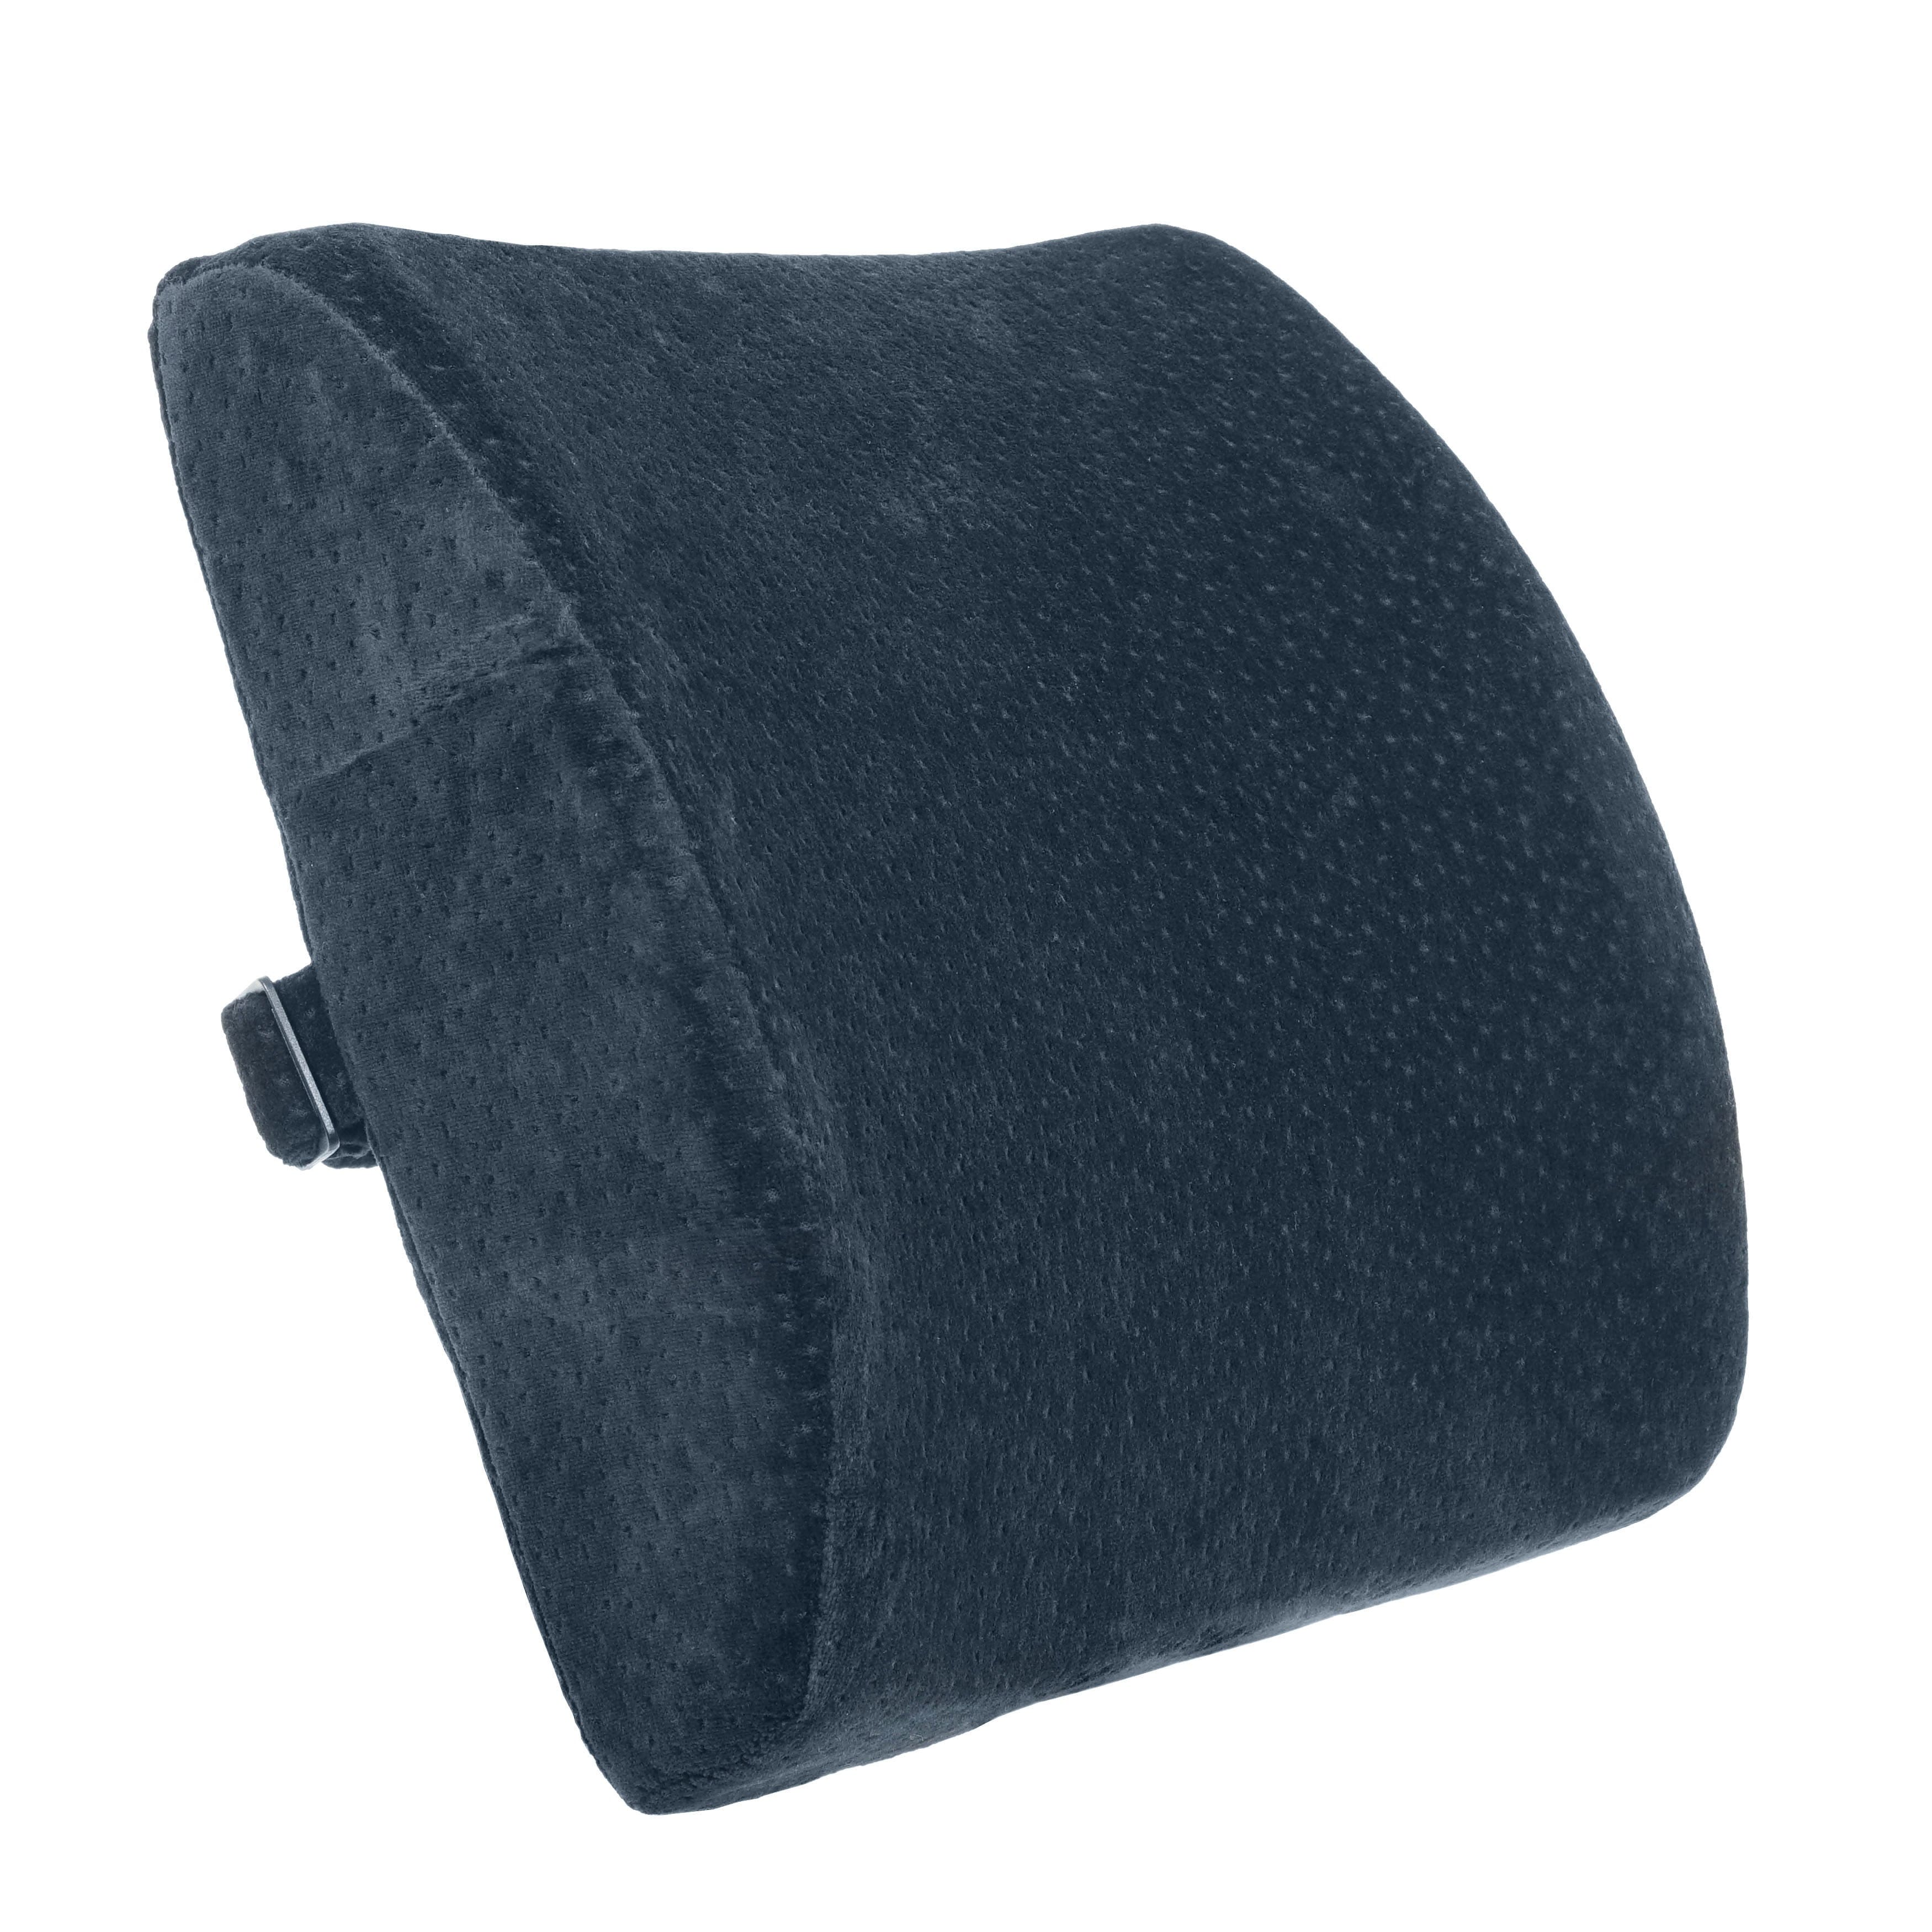 Lumbar Back Cushion For Back Support & Elliptical Exercises